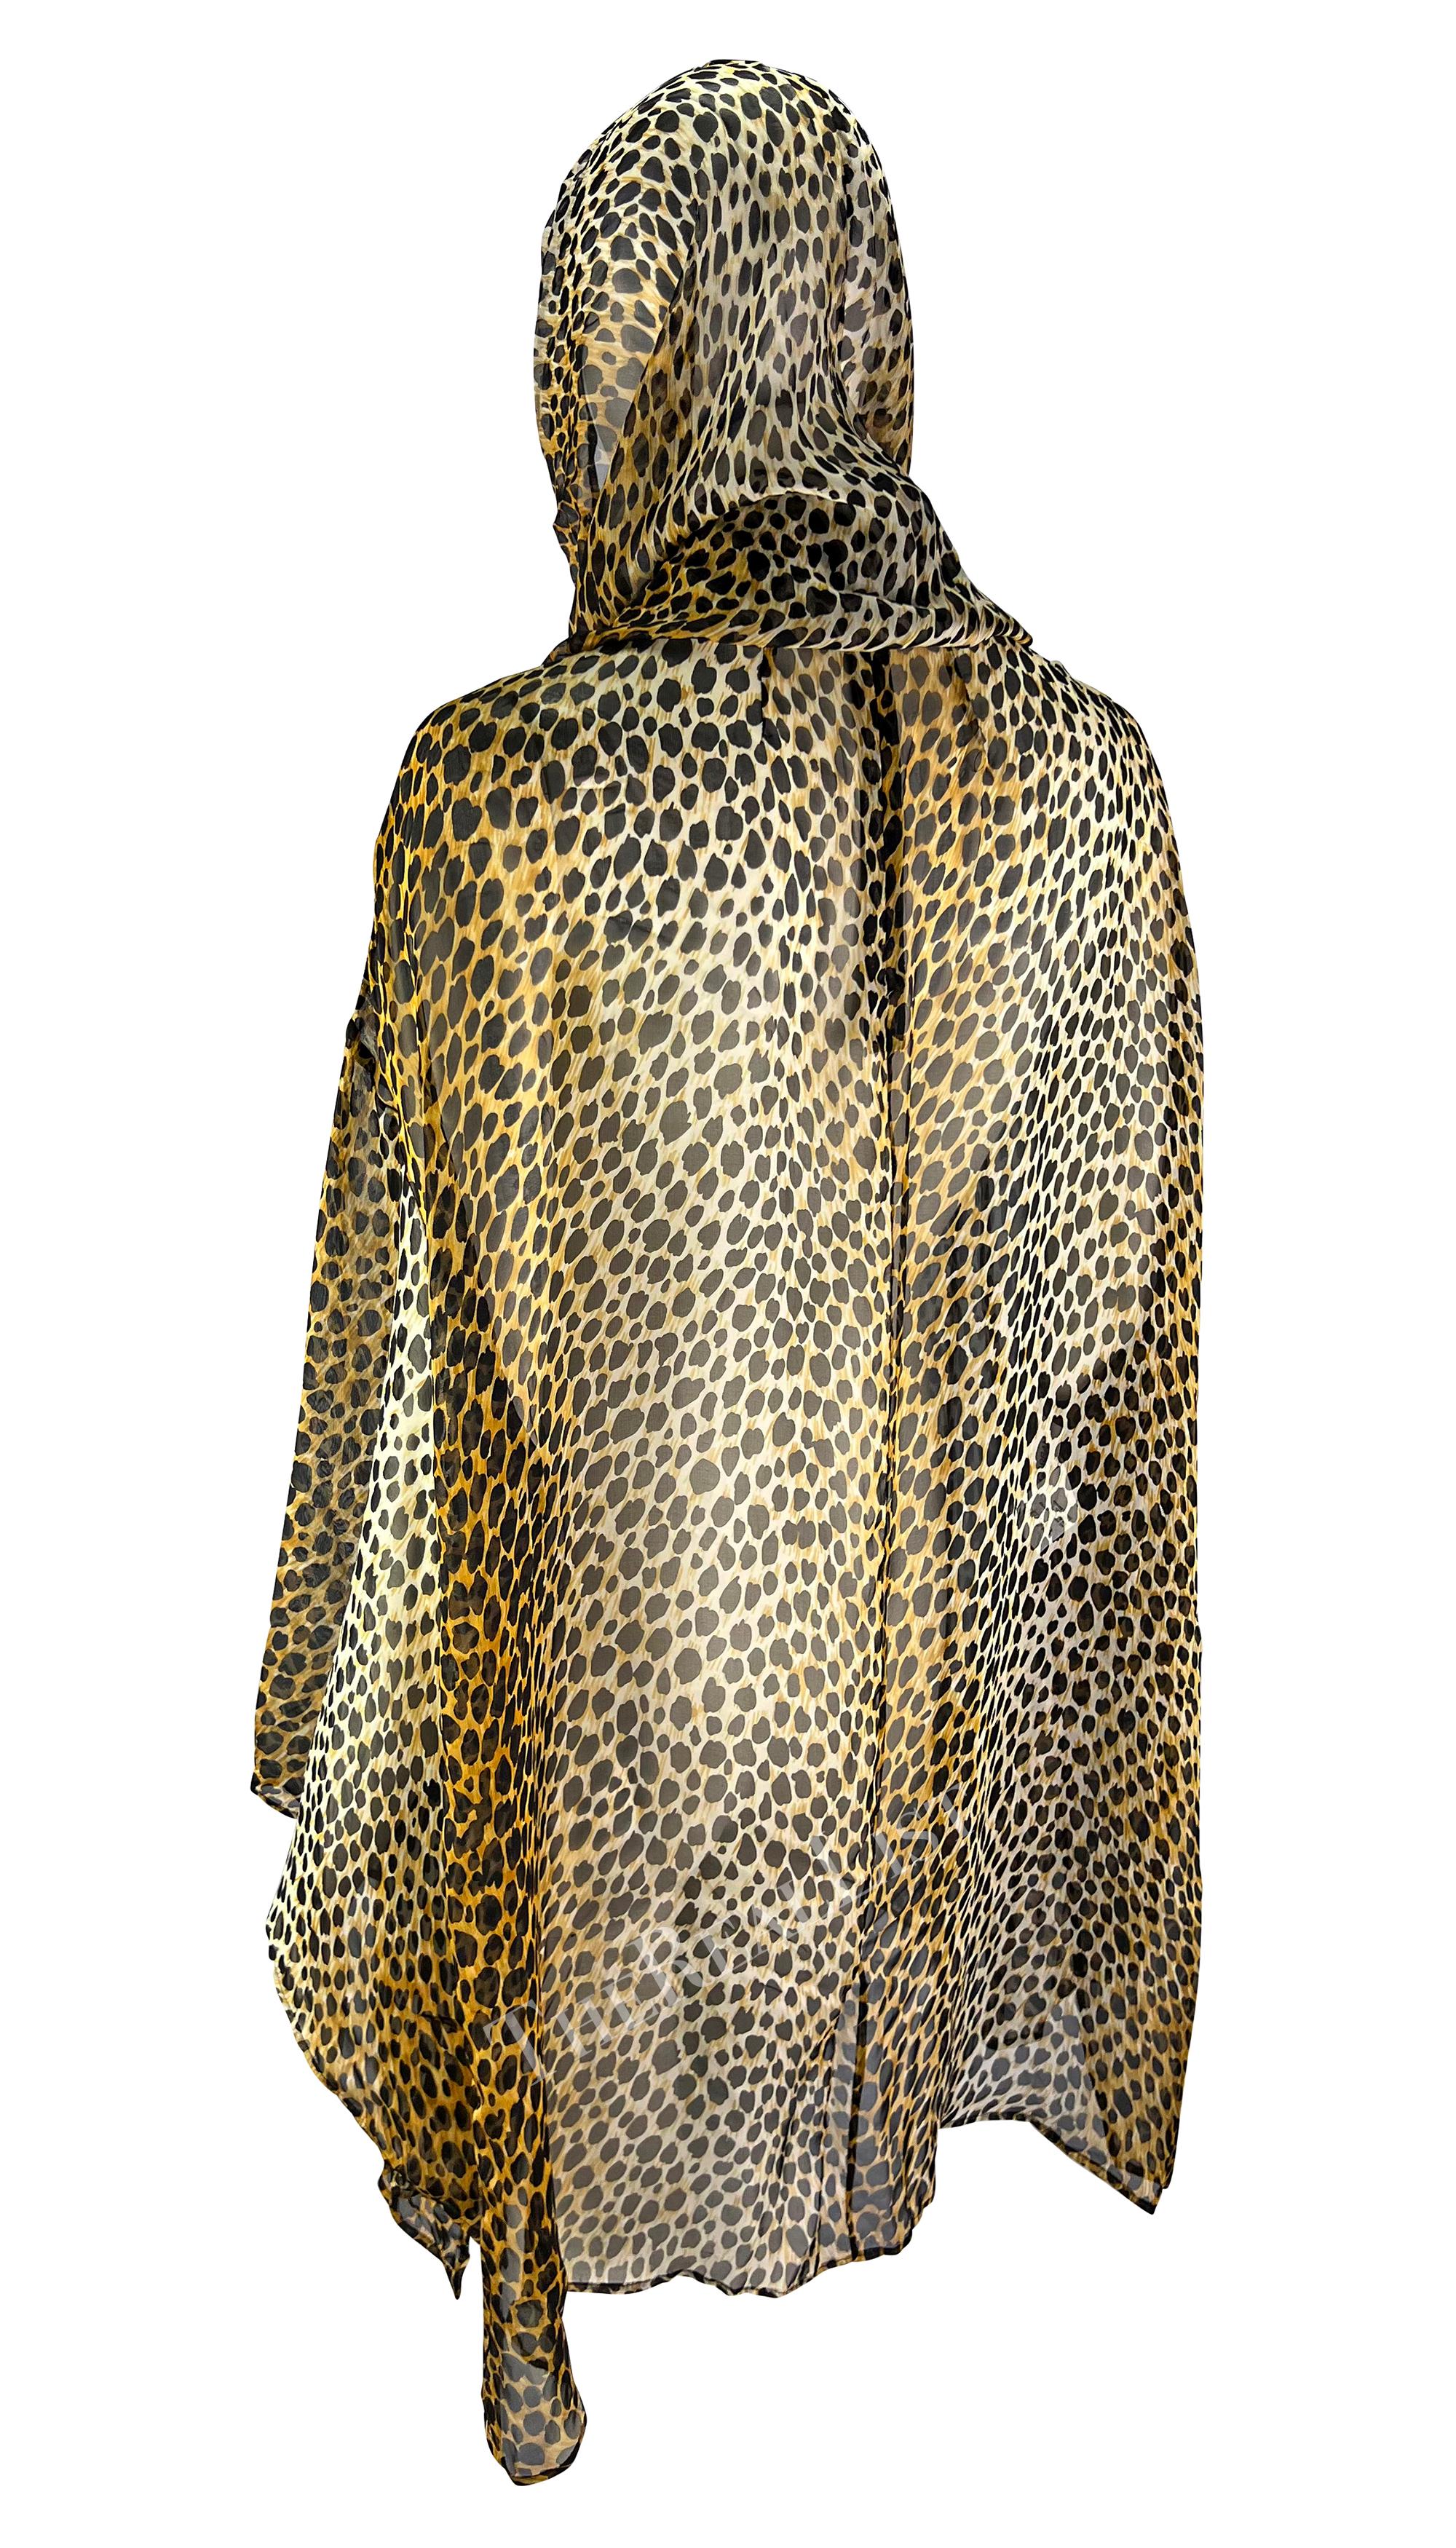 S/S 1996 Dolce & Gabbana Runway Cheetah Print Sheer Silk Hooded Poncho Tunic 2